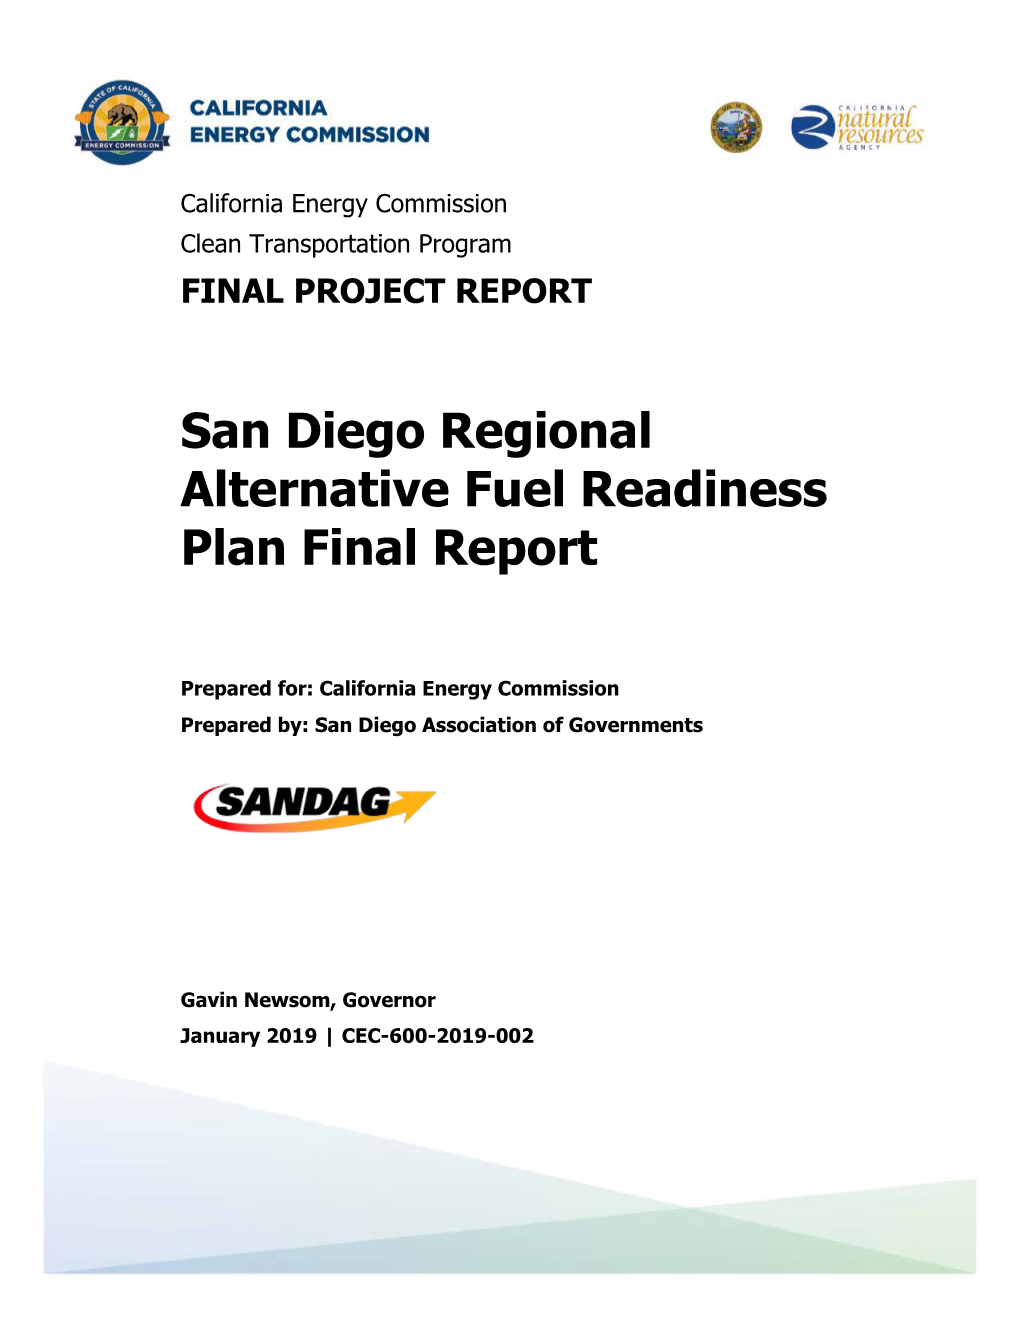 San Diego Regional Alternative Fuel Readiness Plan Final Report